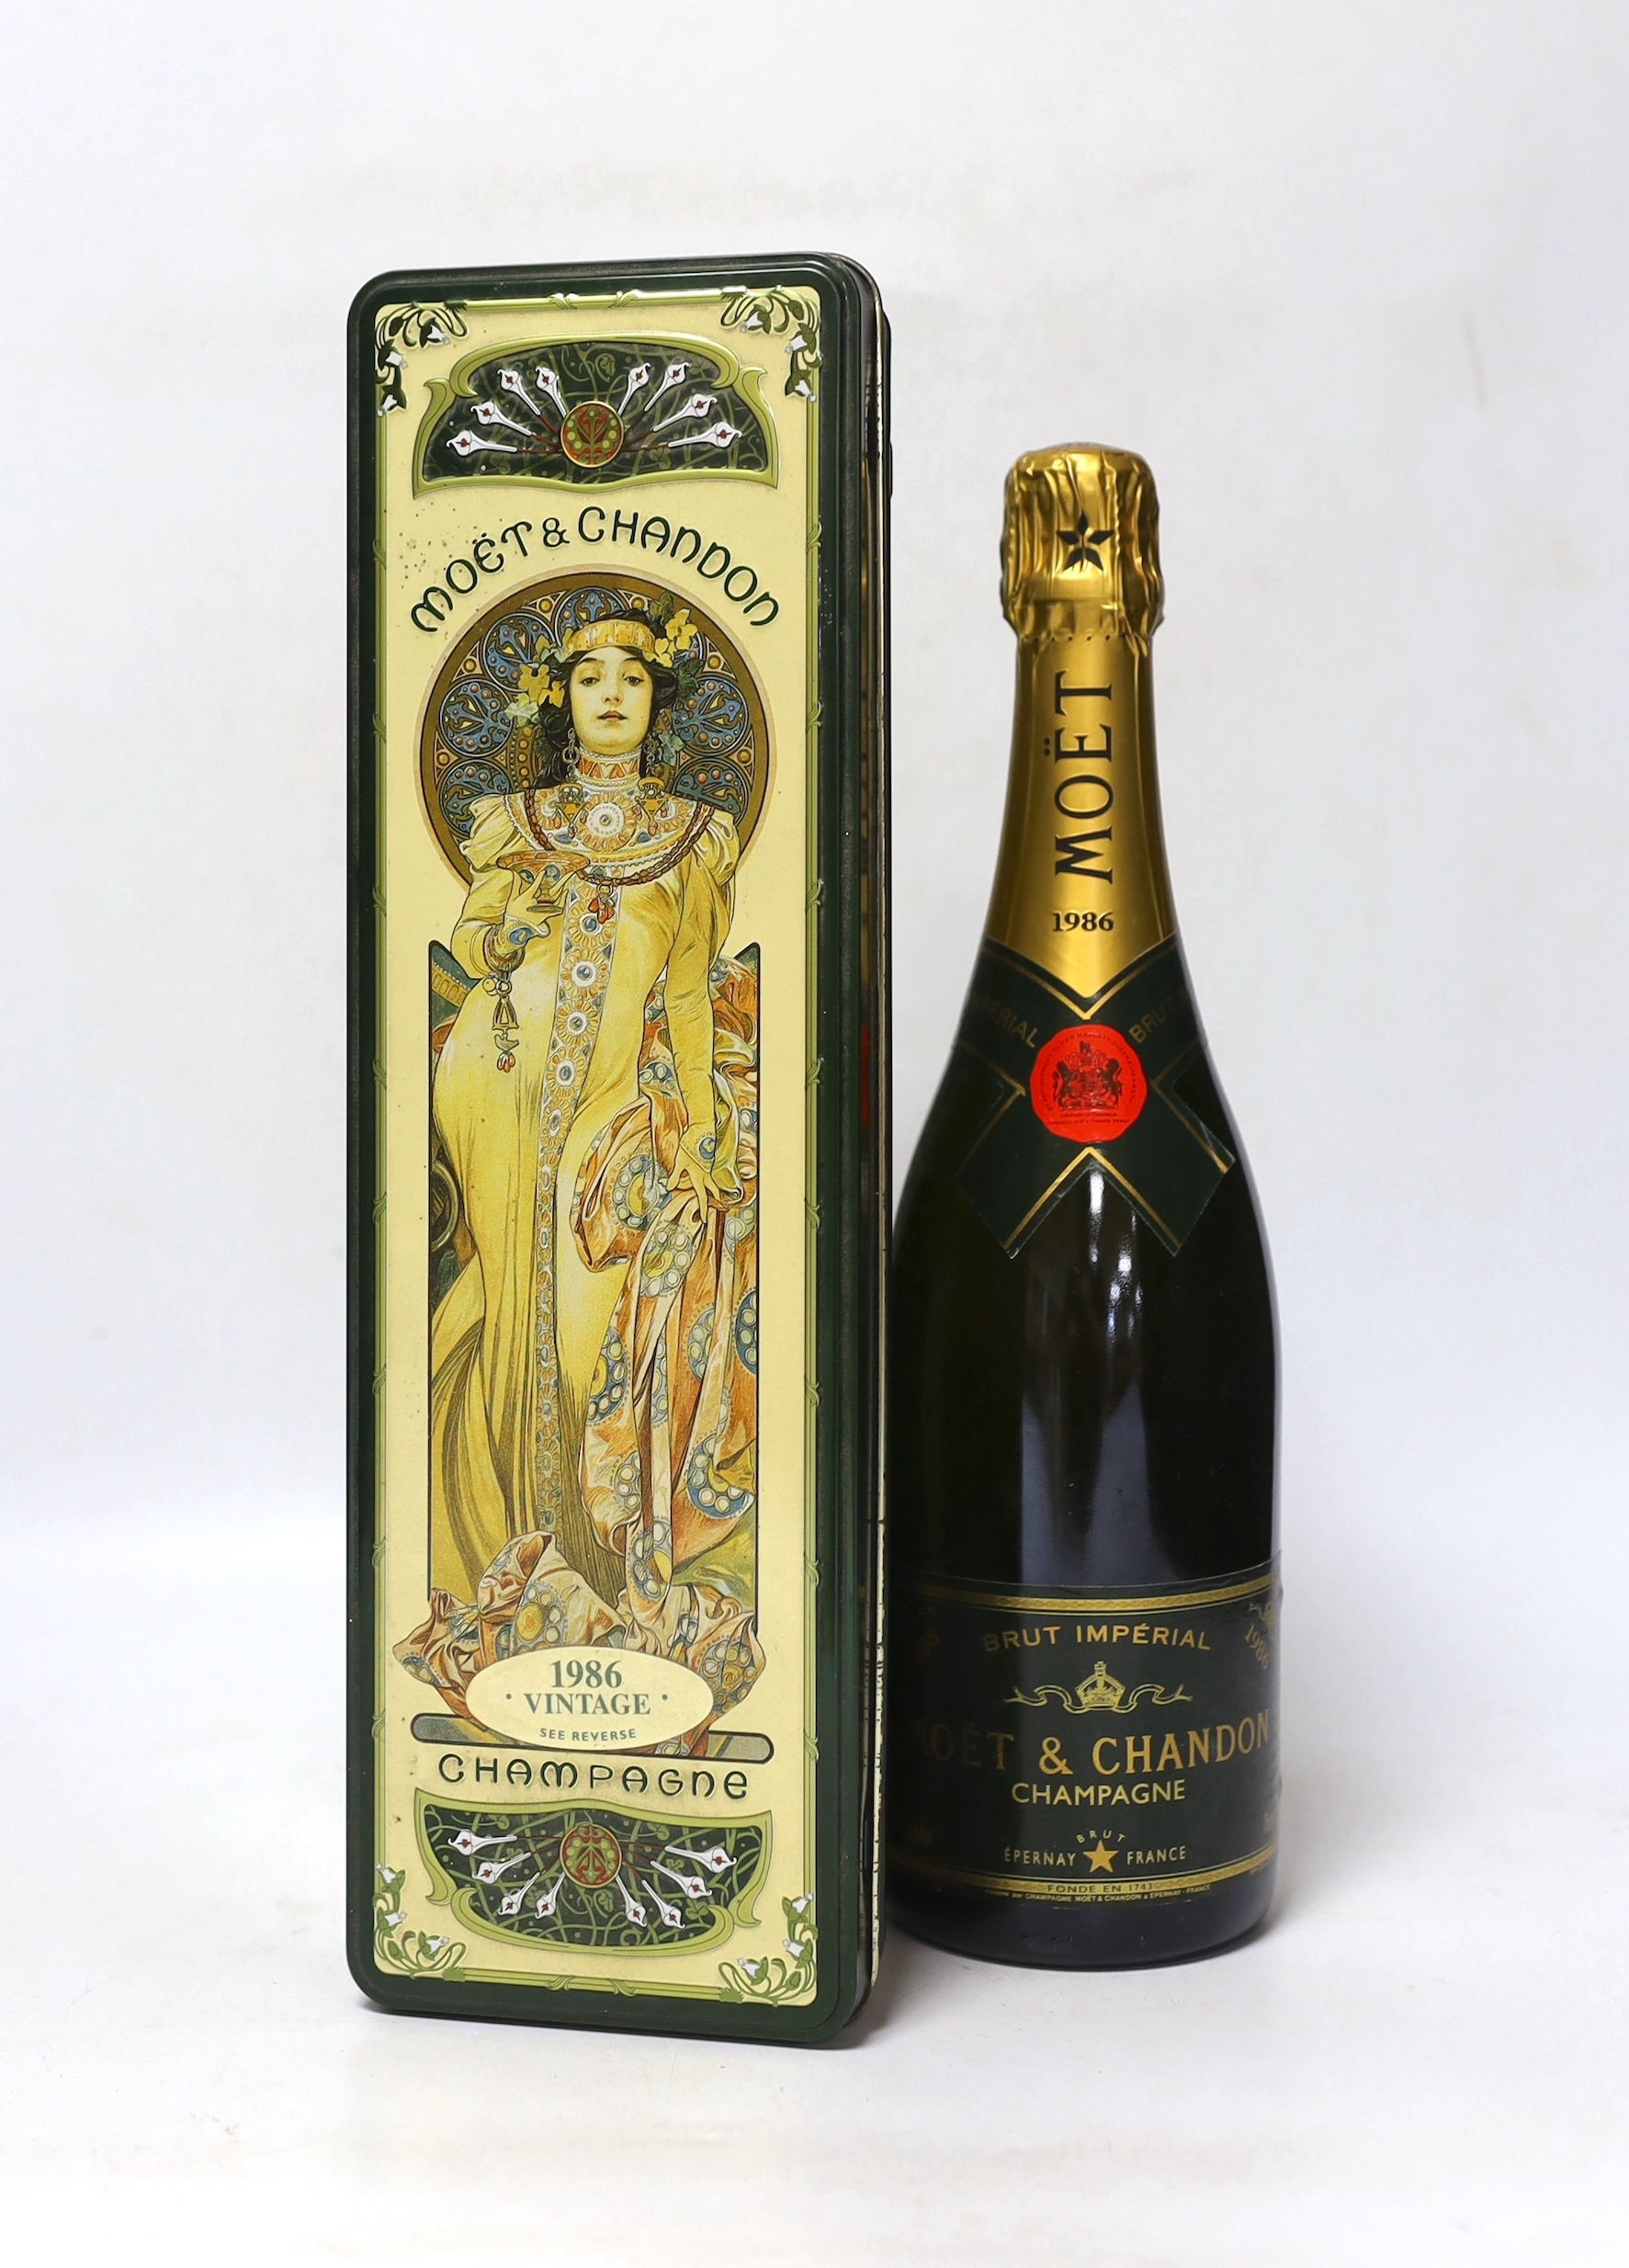 A boxed bottle of Moët & Chandon 1986